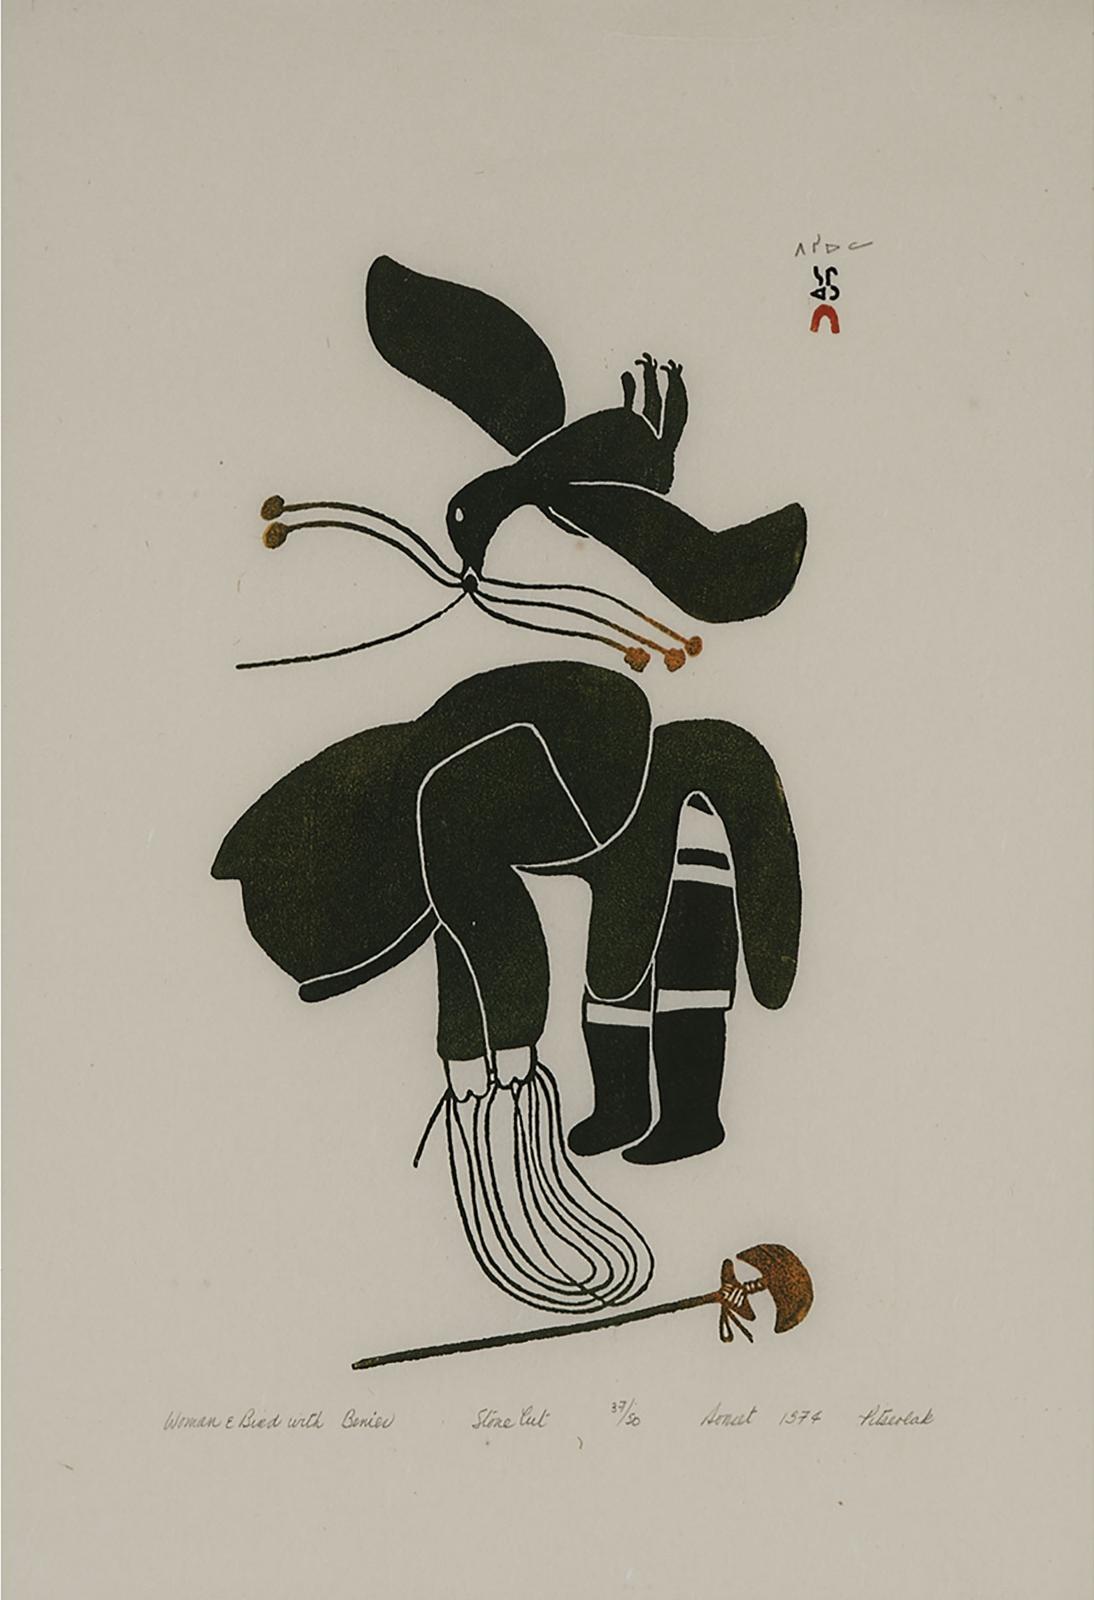 Pitseolak Ashoona (1904-1983) - Woman And Bird With Berries